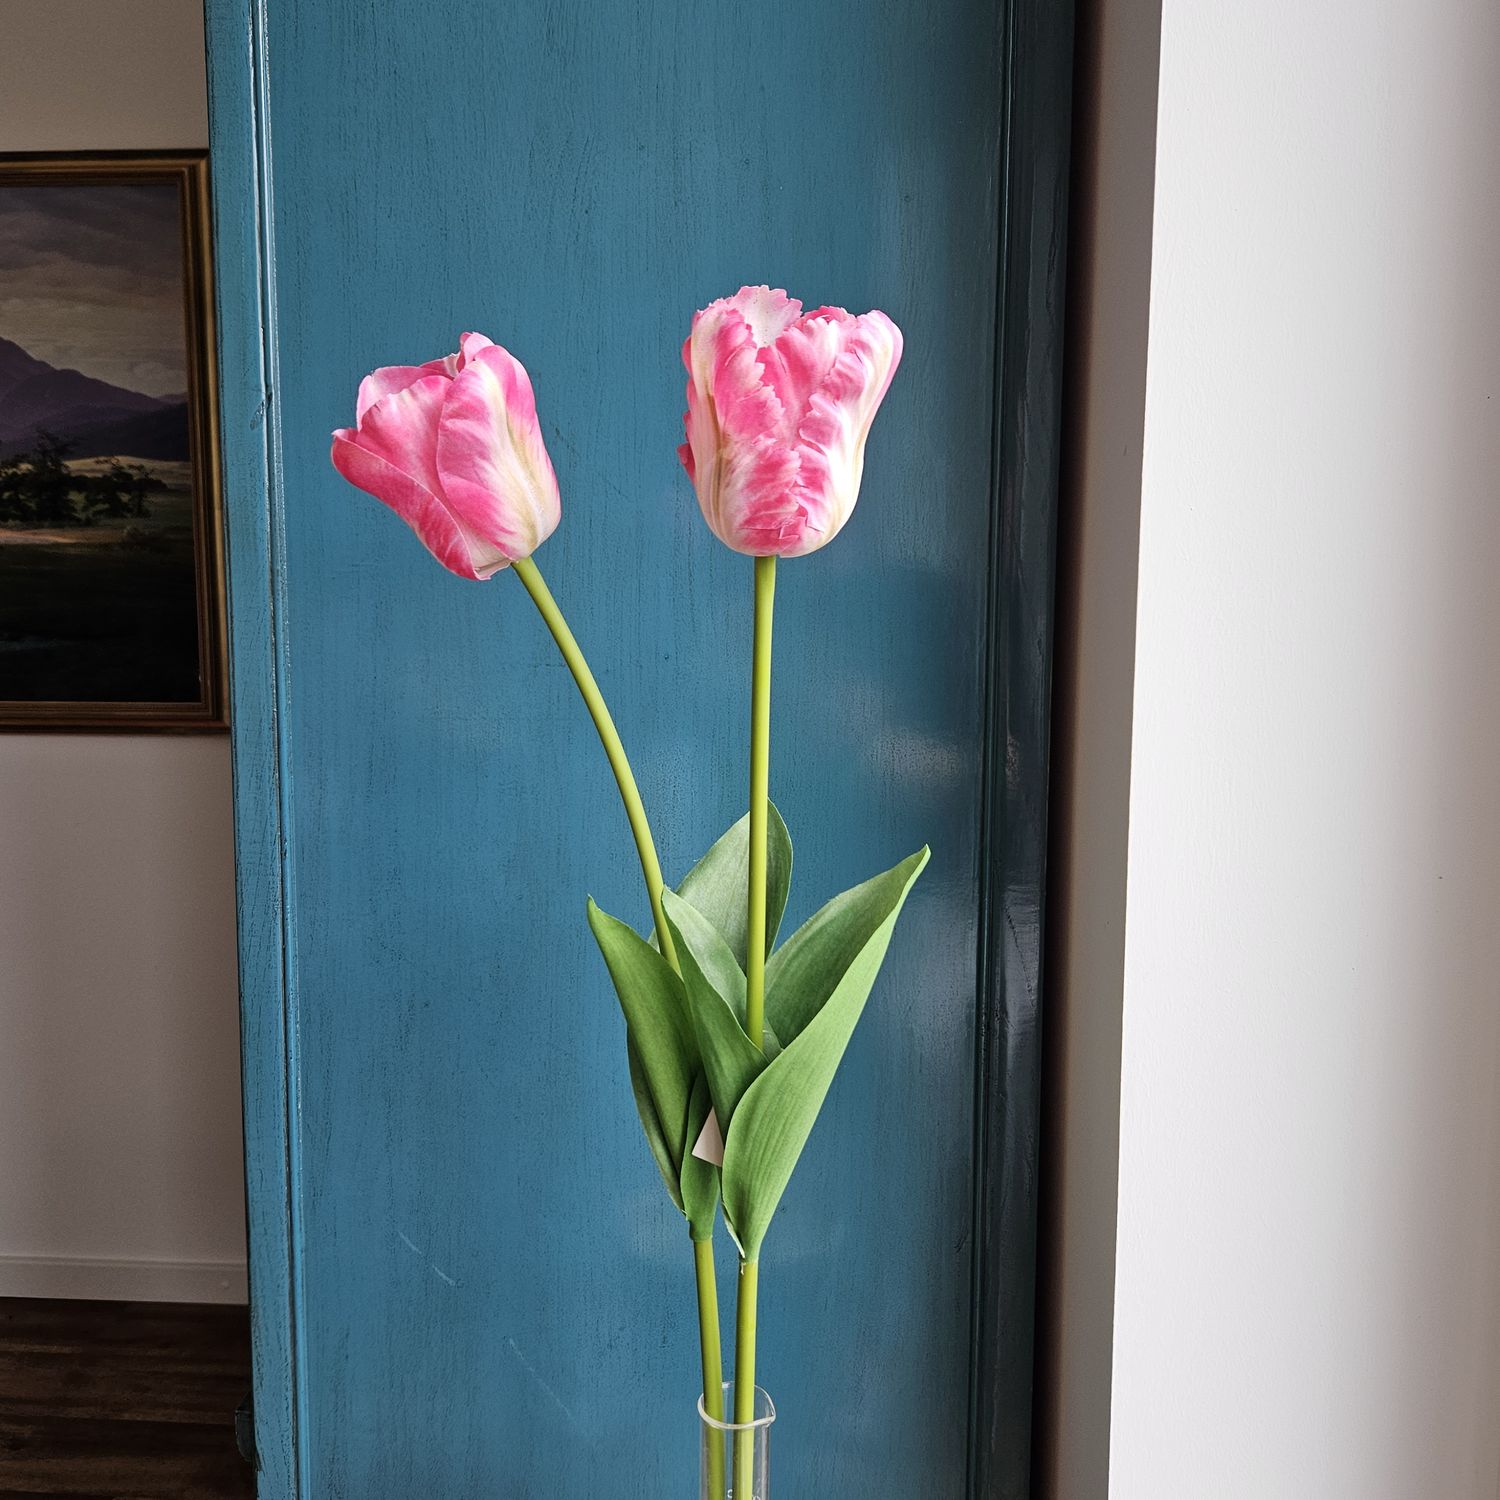 Kunstpapageietulpe, 'Deluxe', 65 cm, Real Touch, rosa-grün